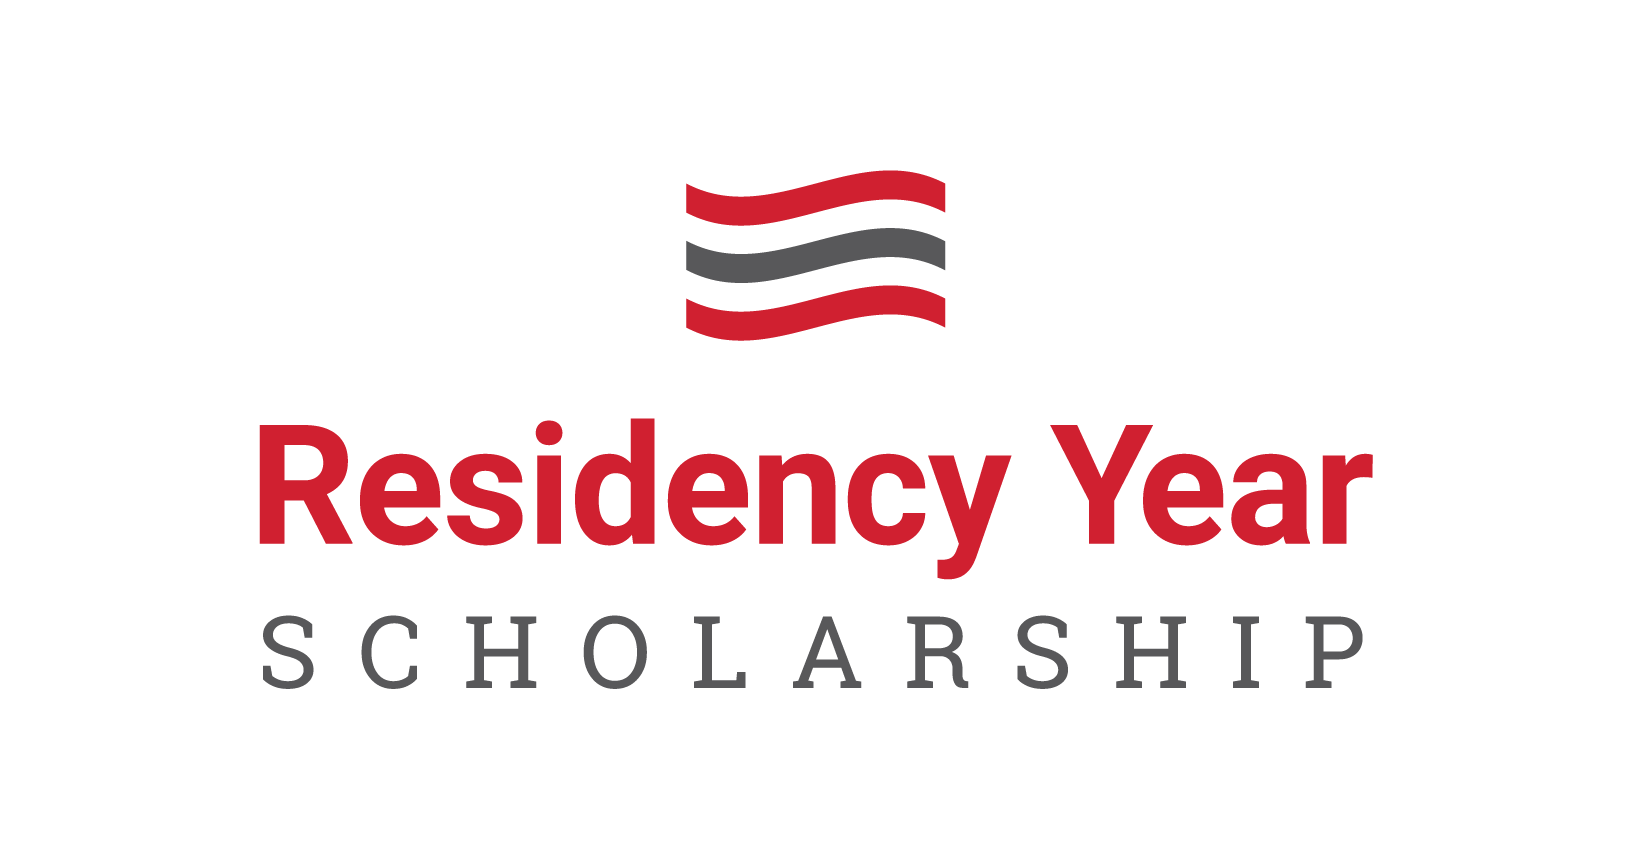 Residency Year Scholarship